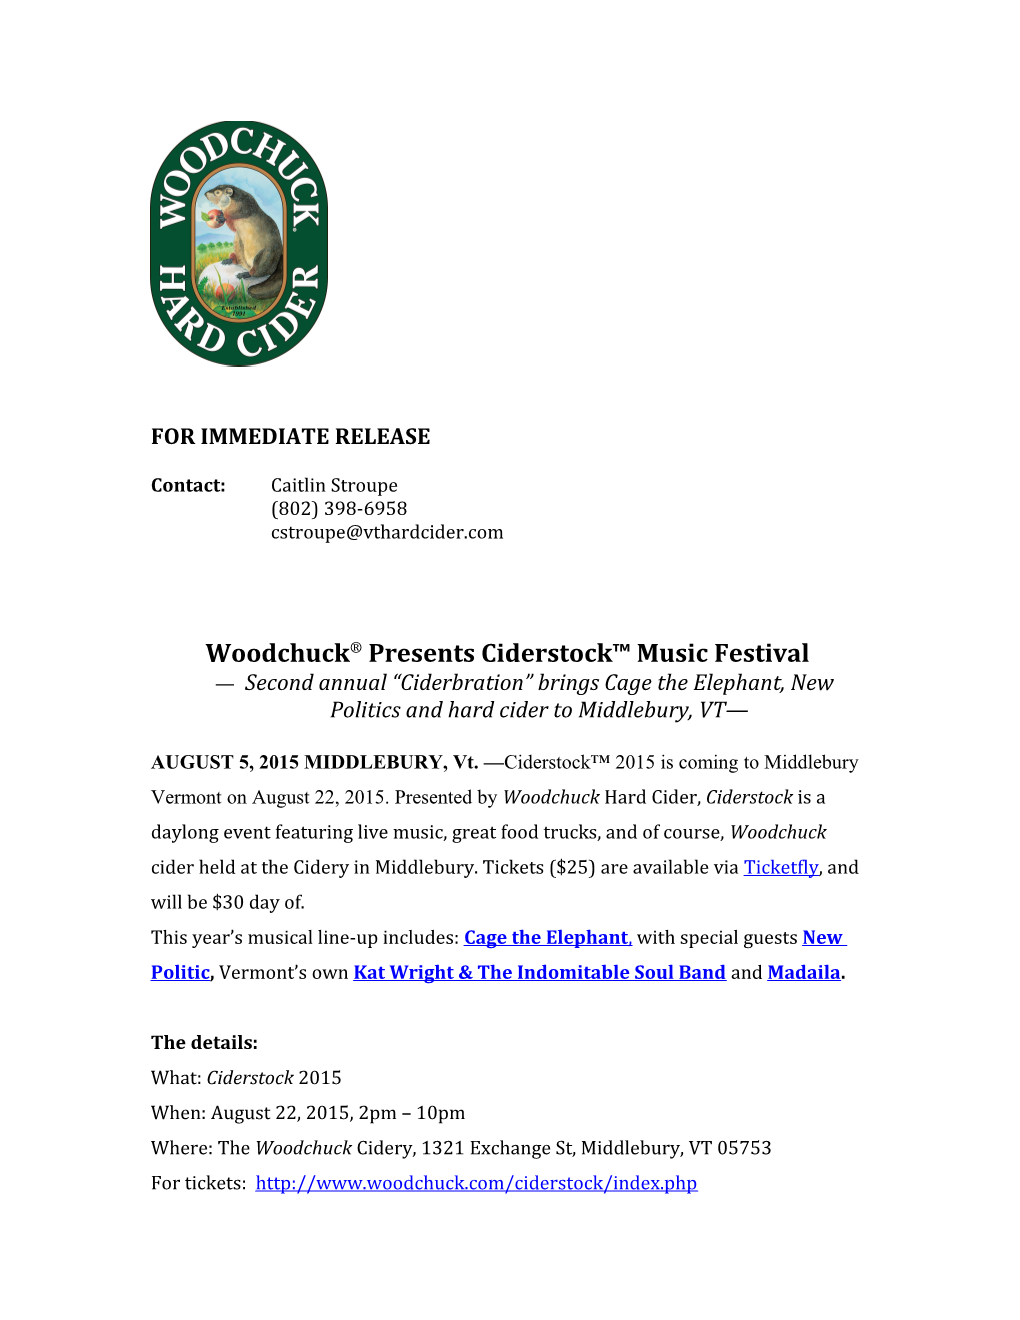 Woodchuck Presents Ciderstock Music Festival